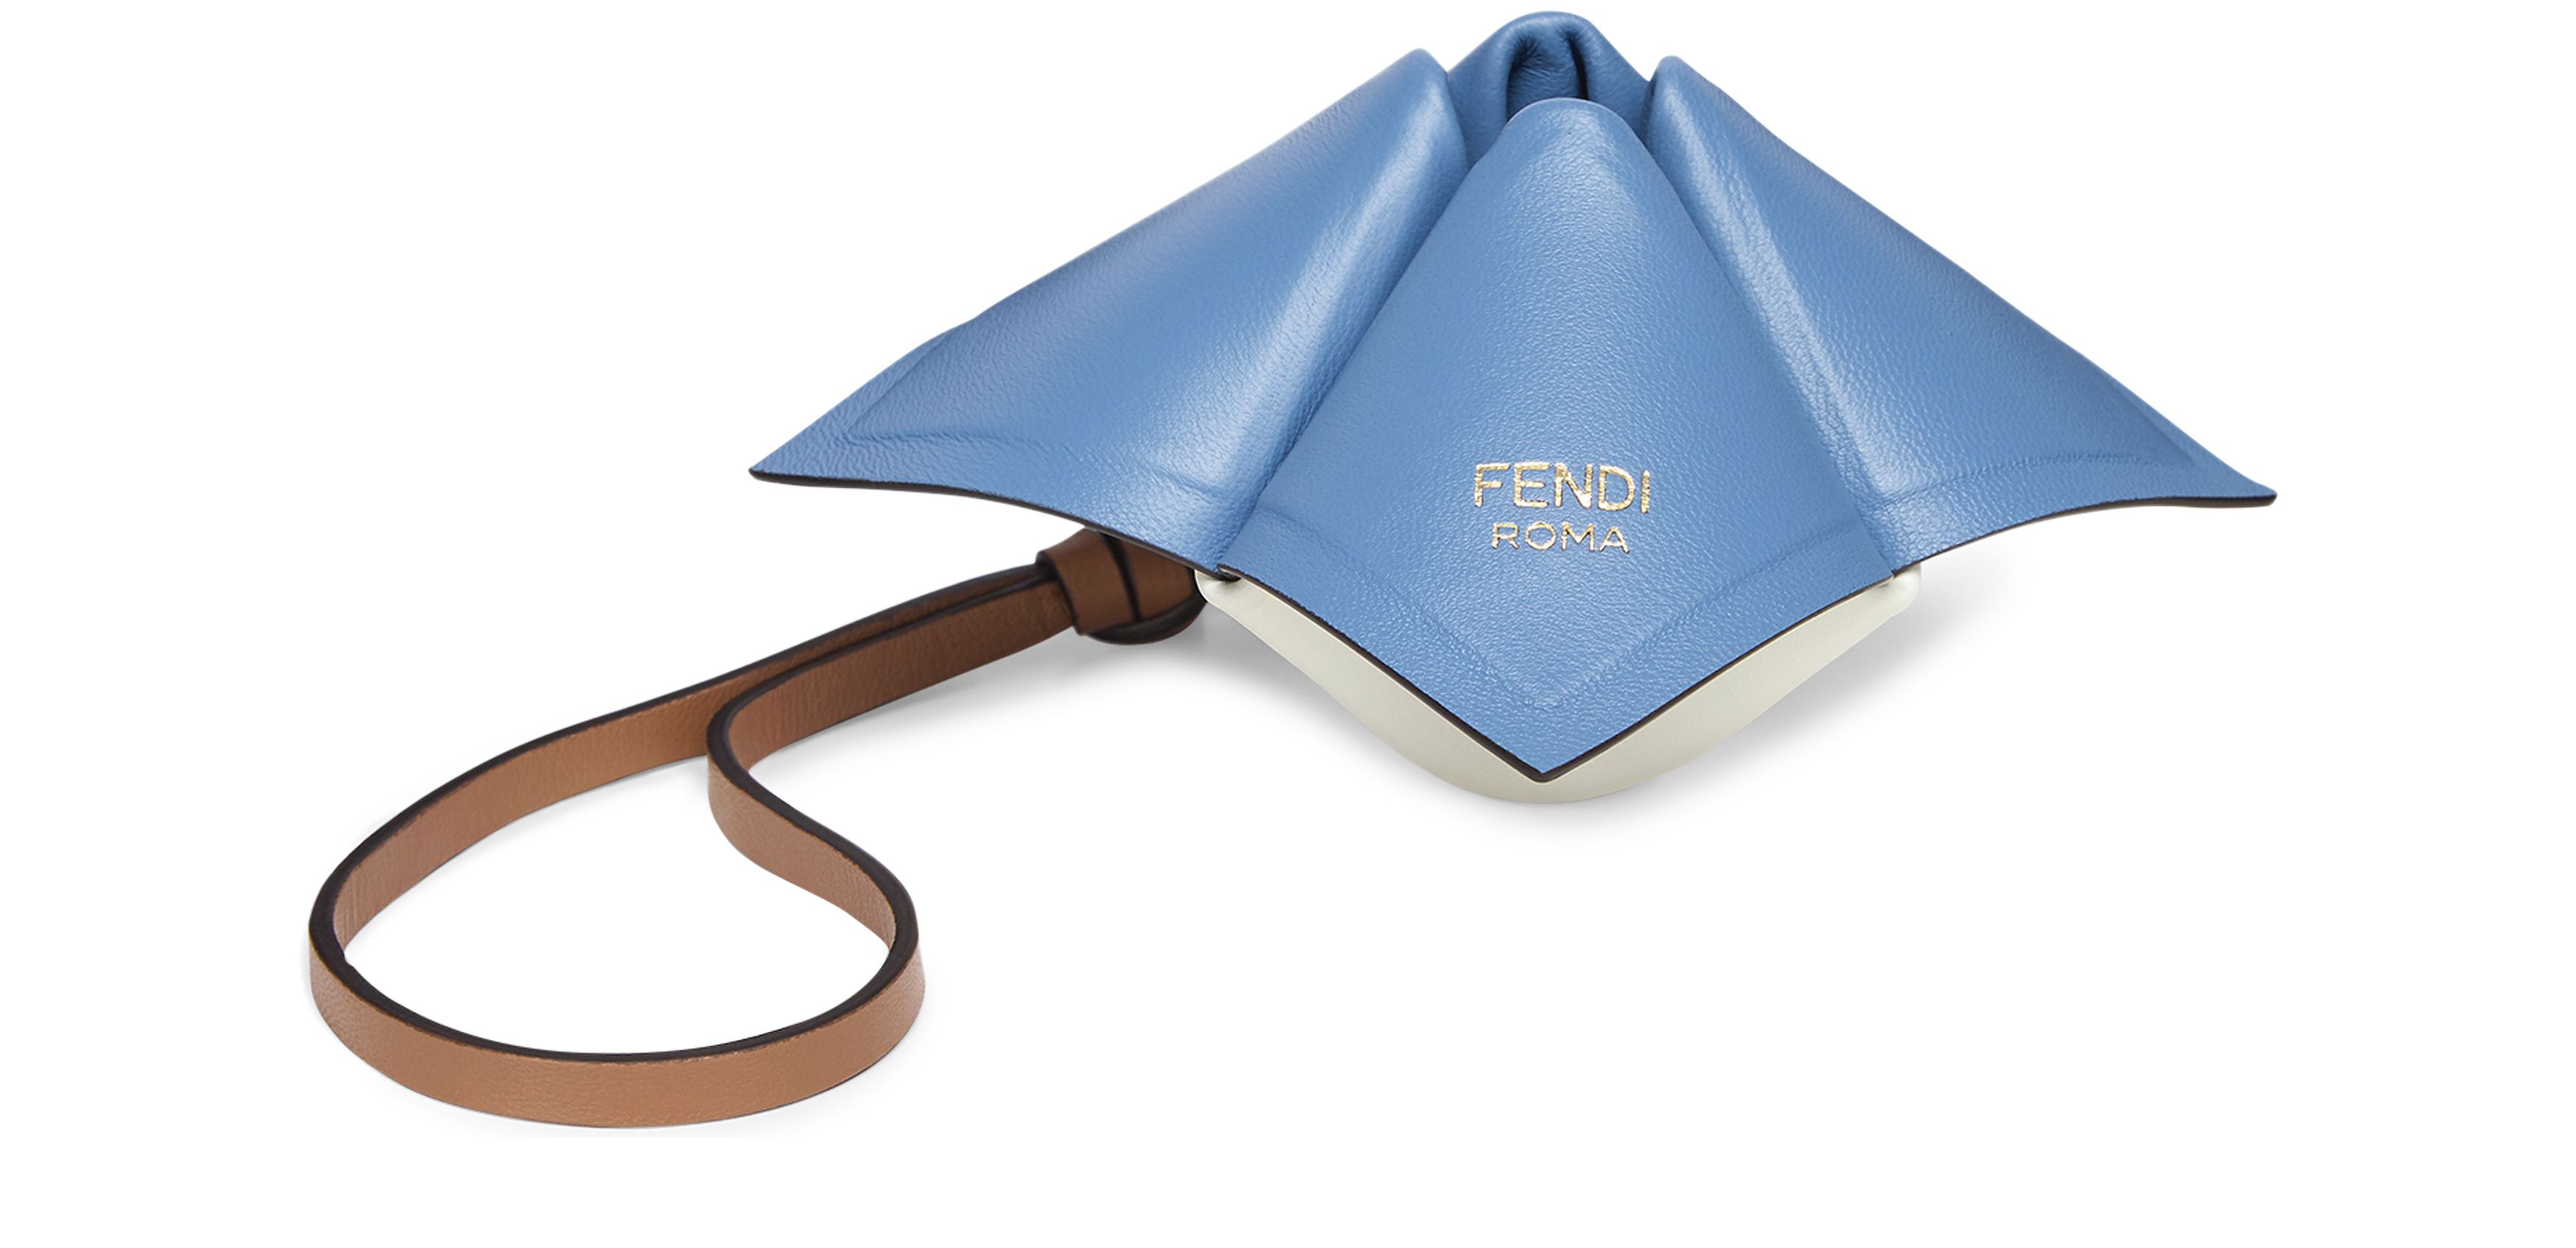 FENDI Fendi Fortune Teller Charm